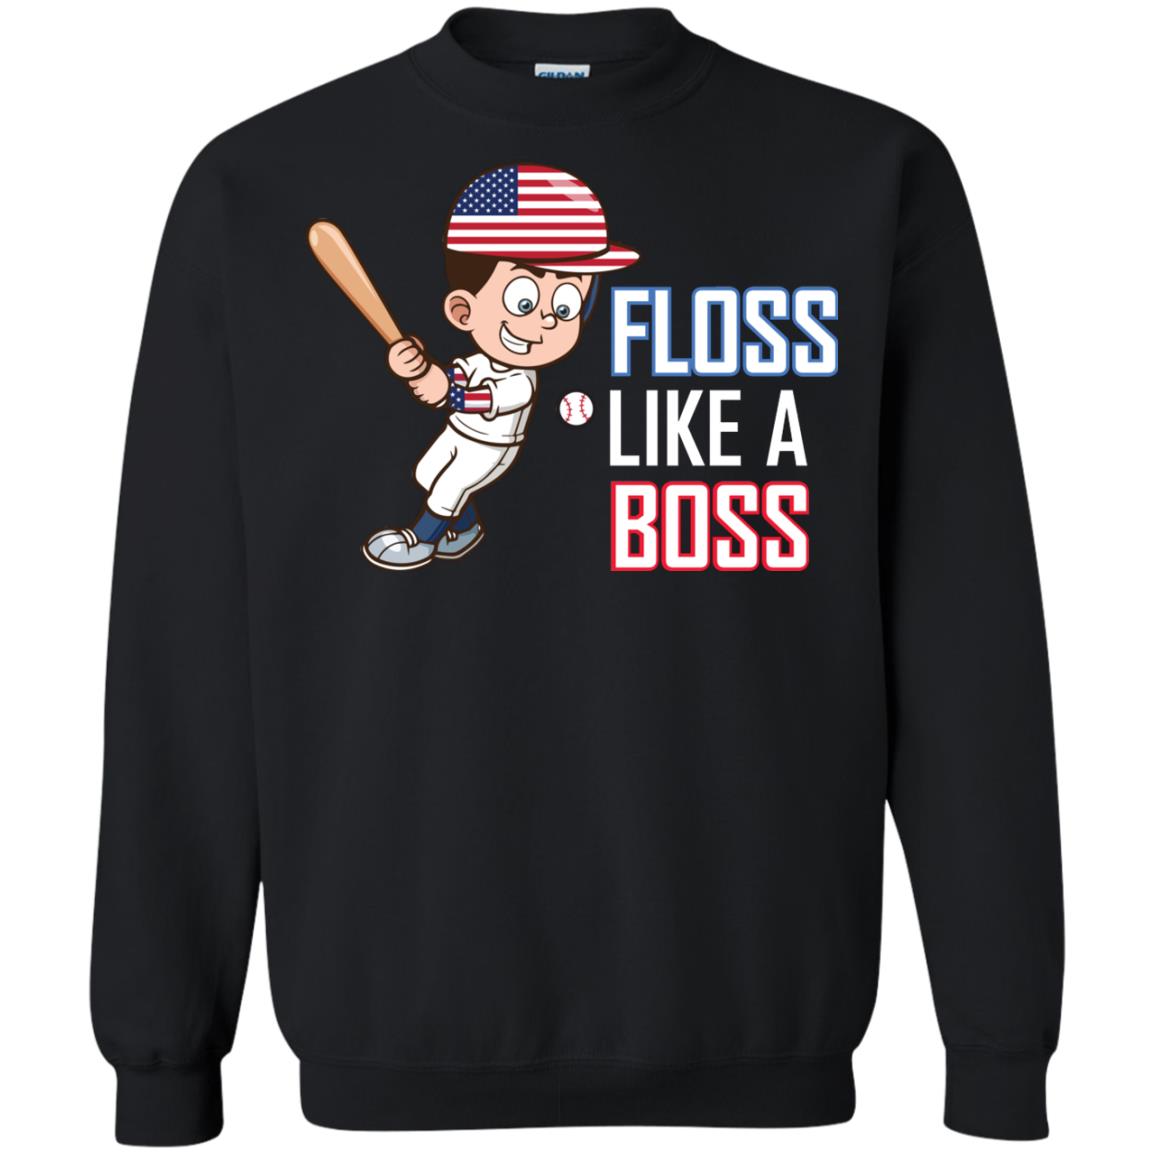 Floss Like A Boss Shirt For Baseball PlayersG180 Gildan Crewneck Pullover Sweatshirt 8 oz.